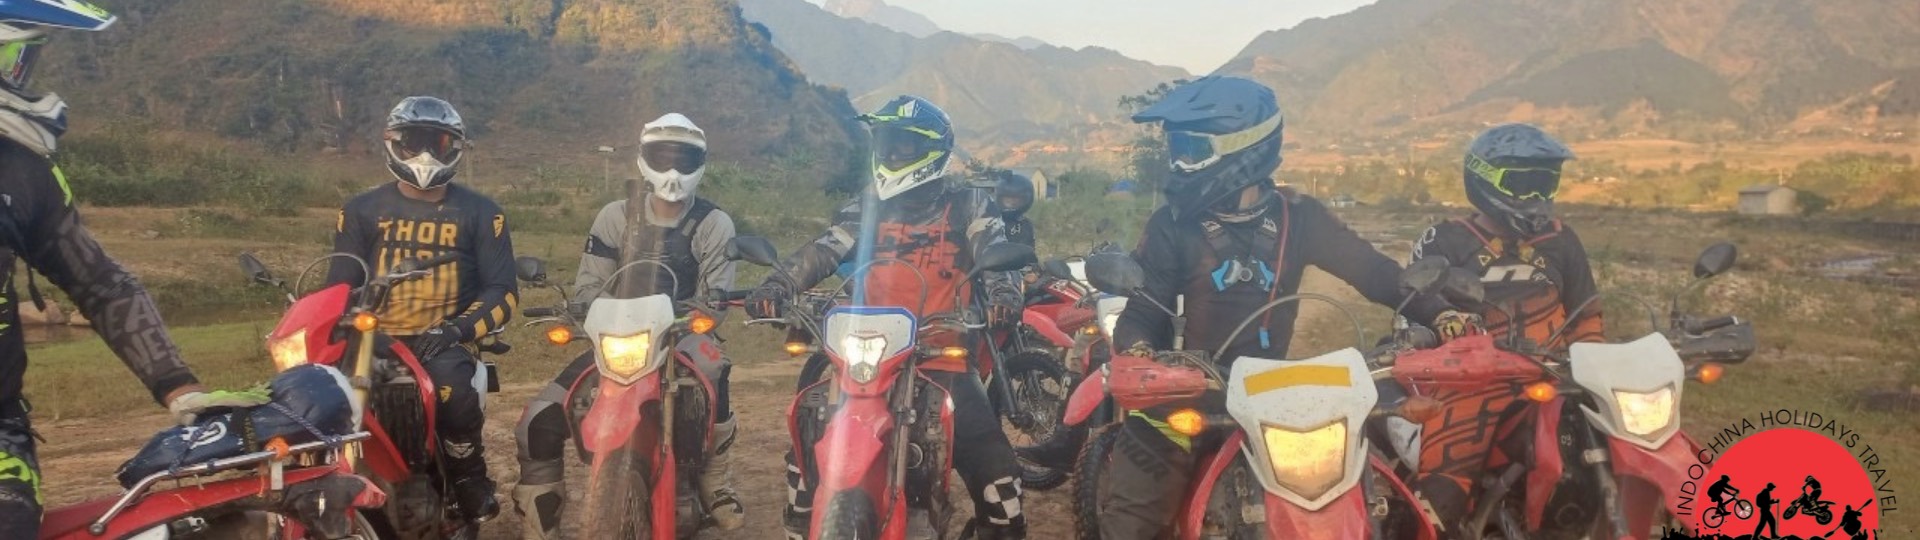 Laos Motorbike Tours 1